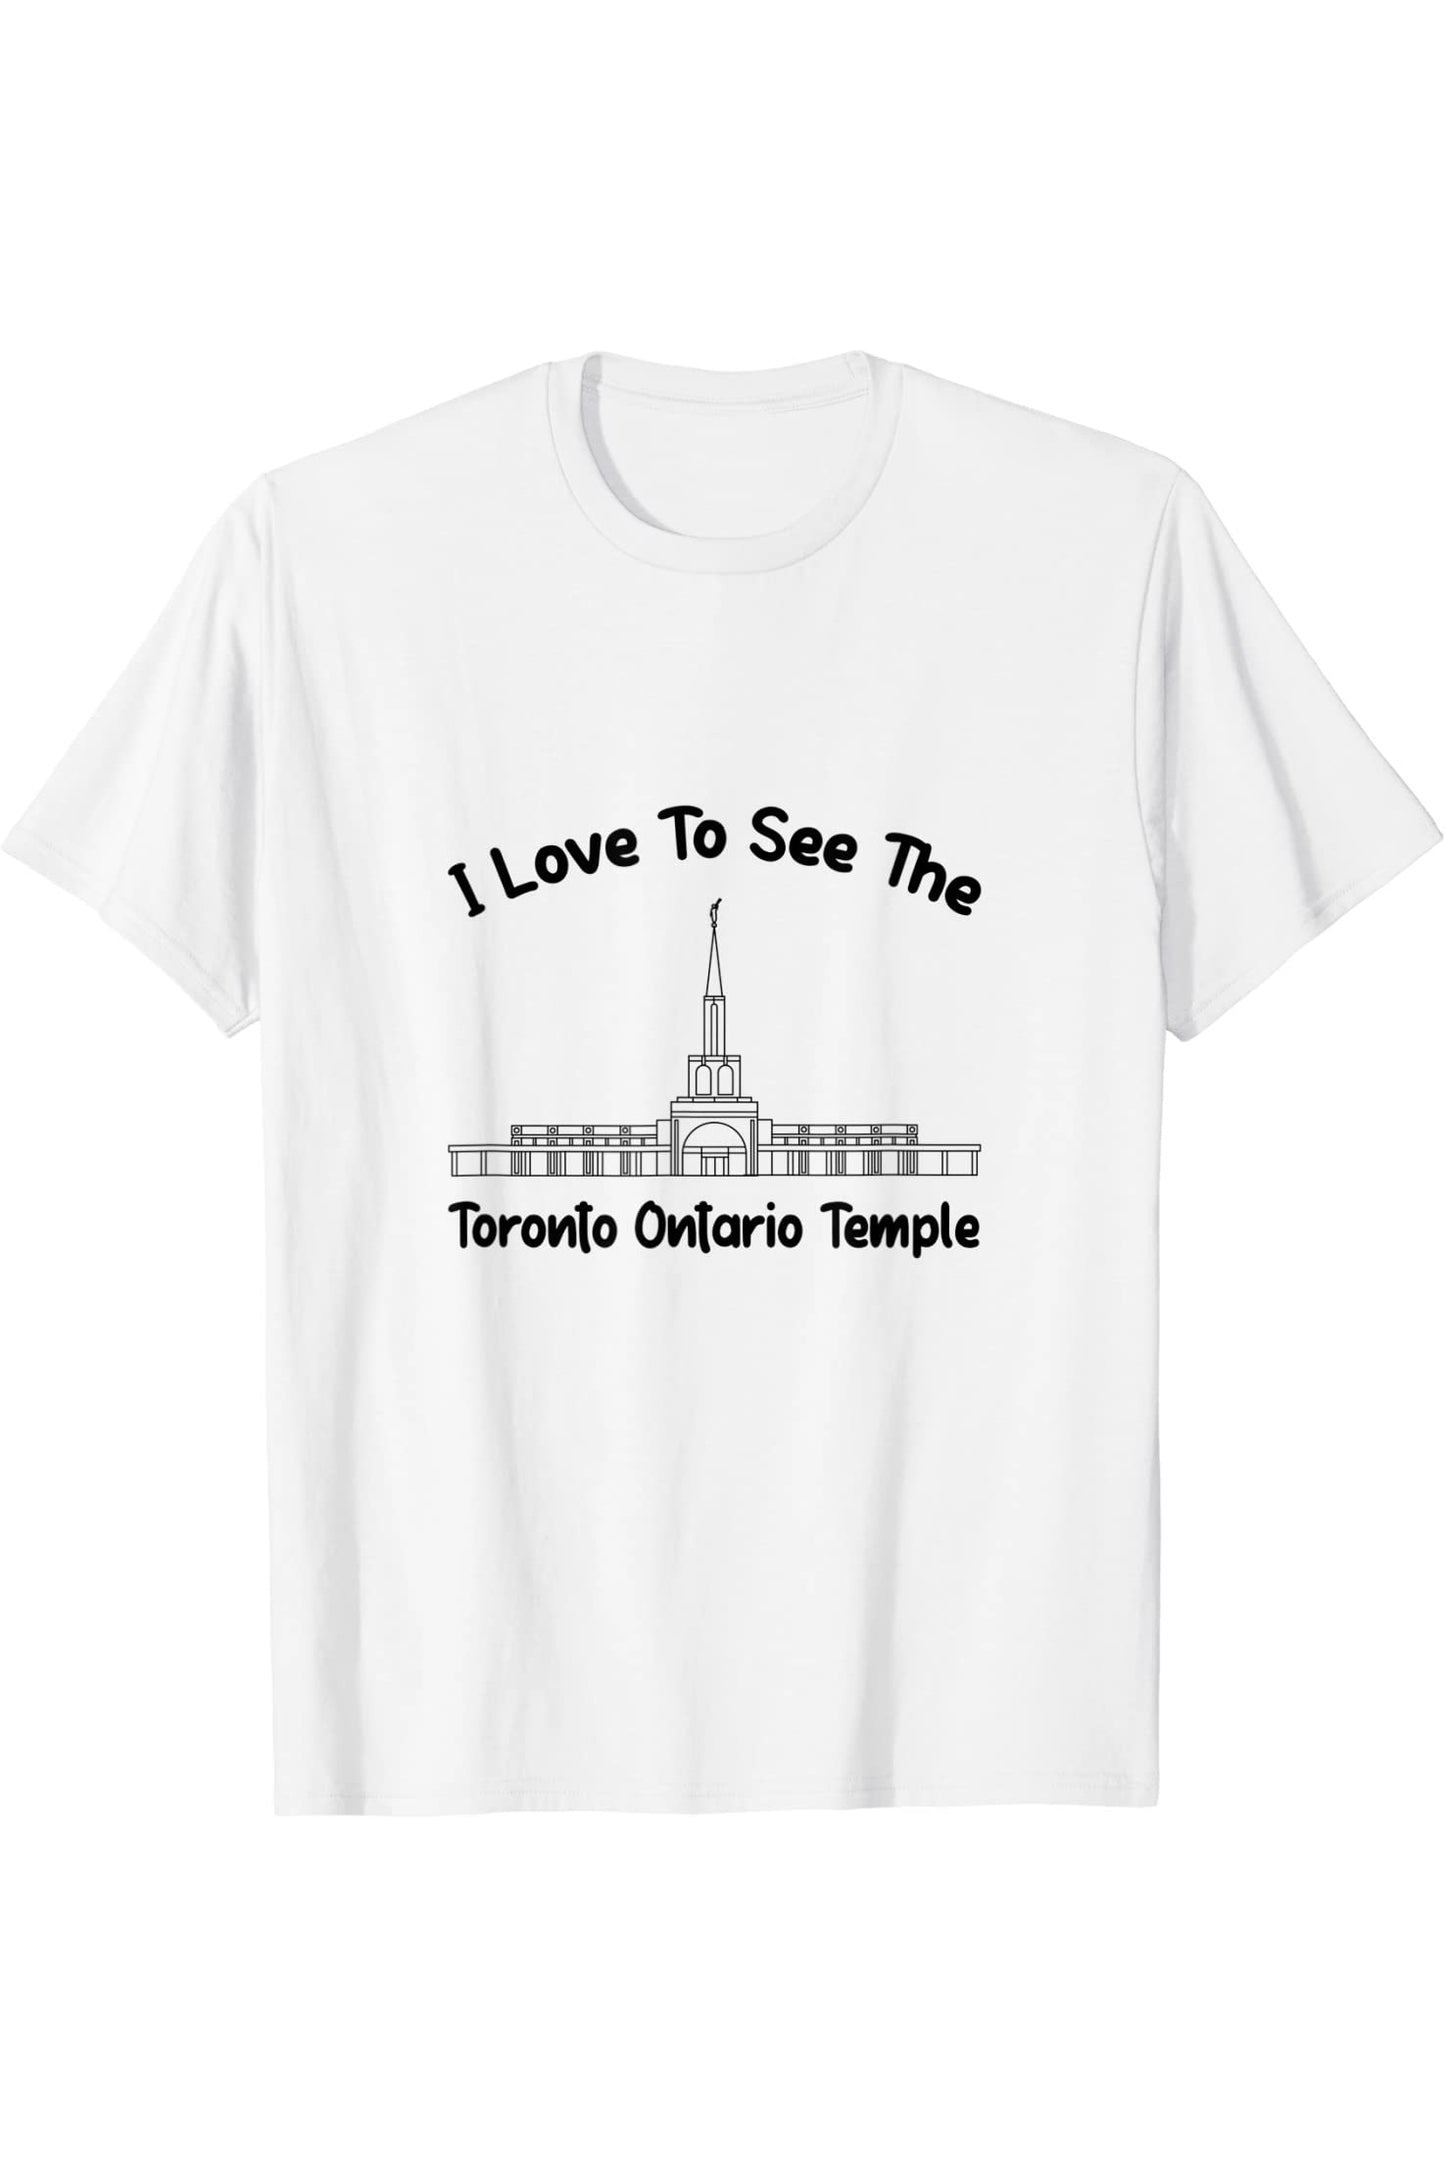 Toronto Ontario Temple T-Shirt - Primary Style (English) US